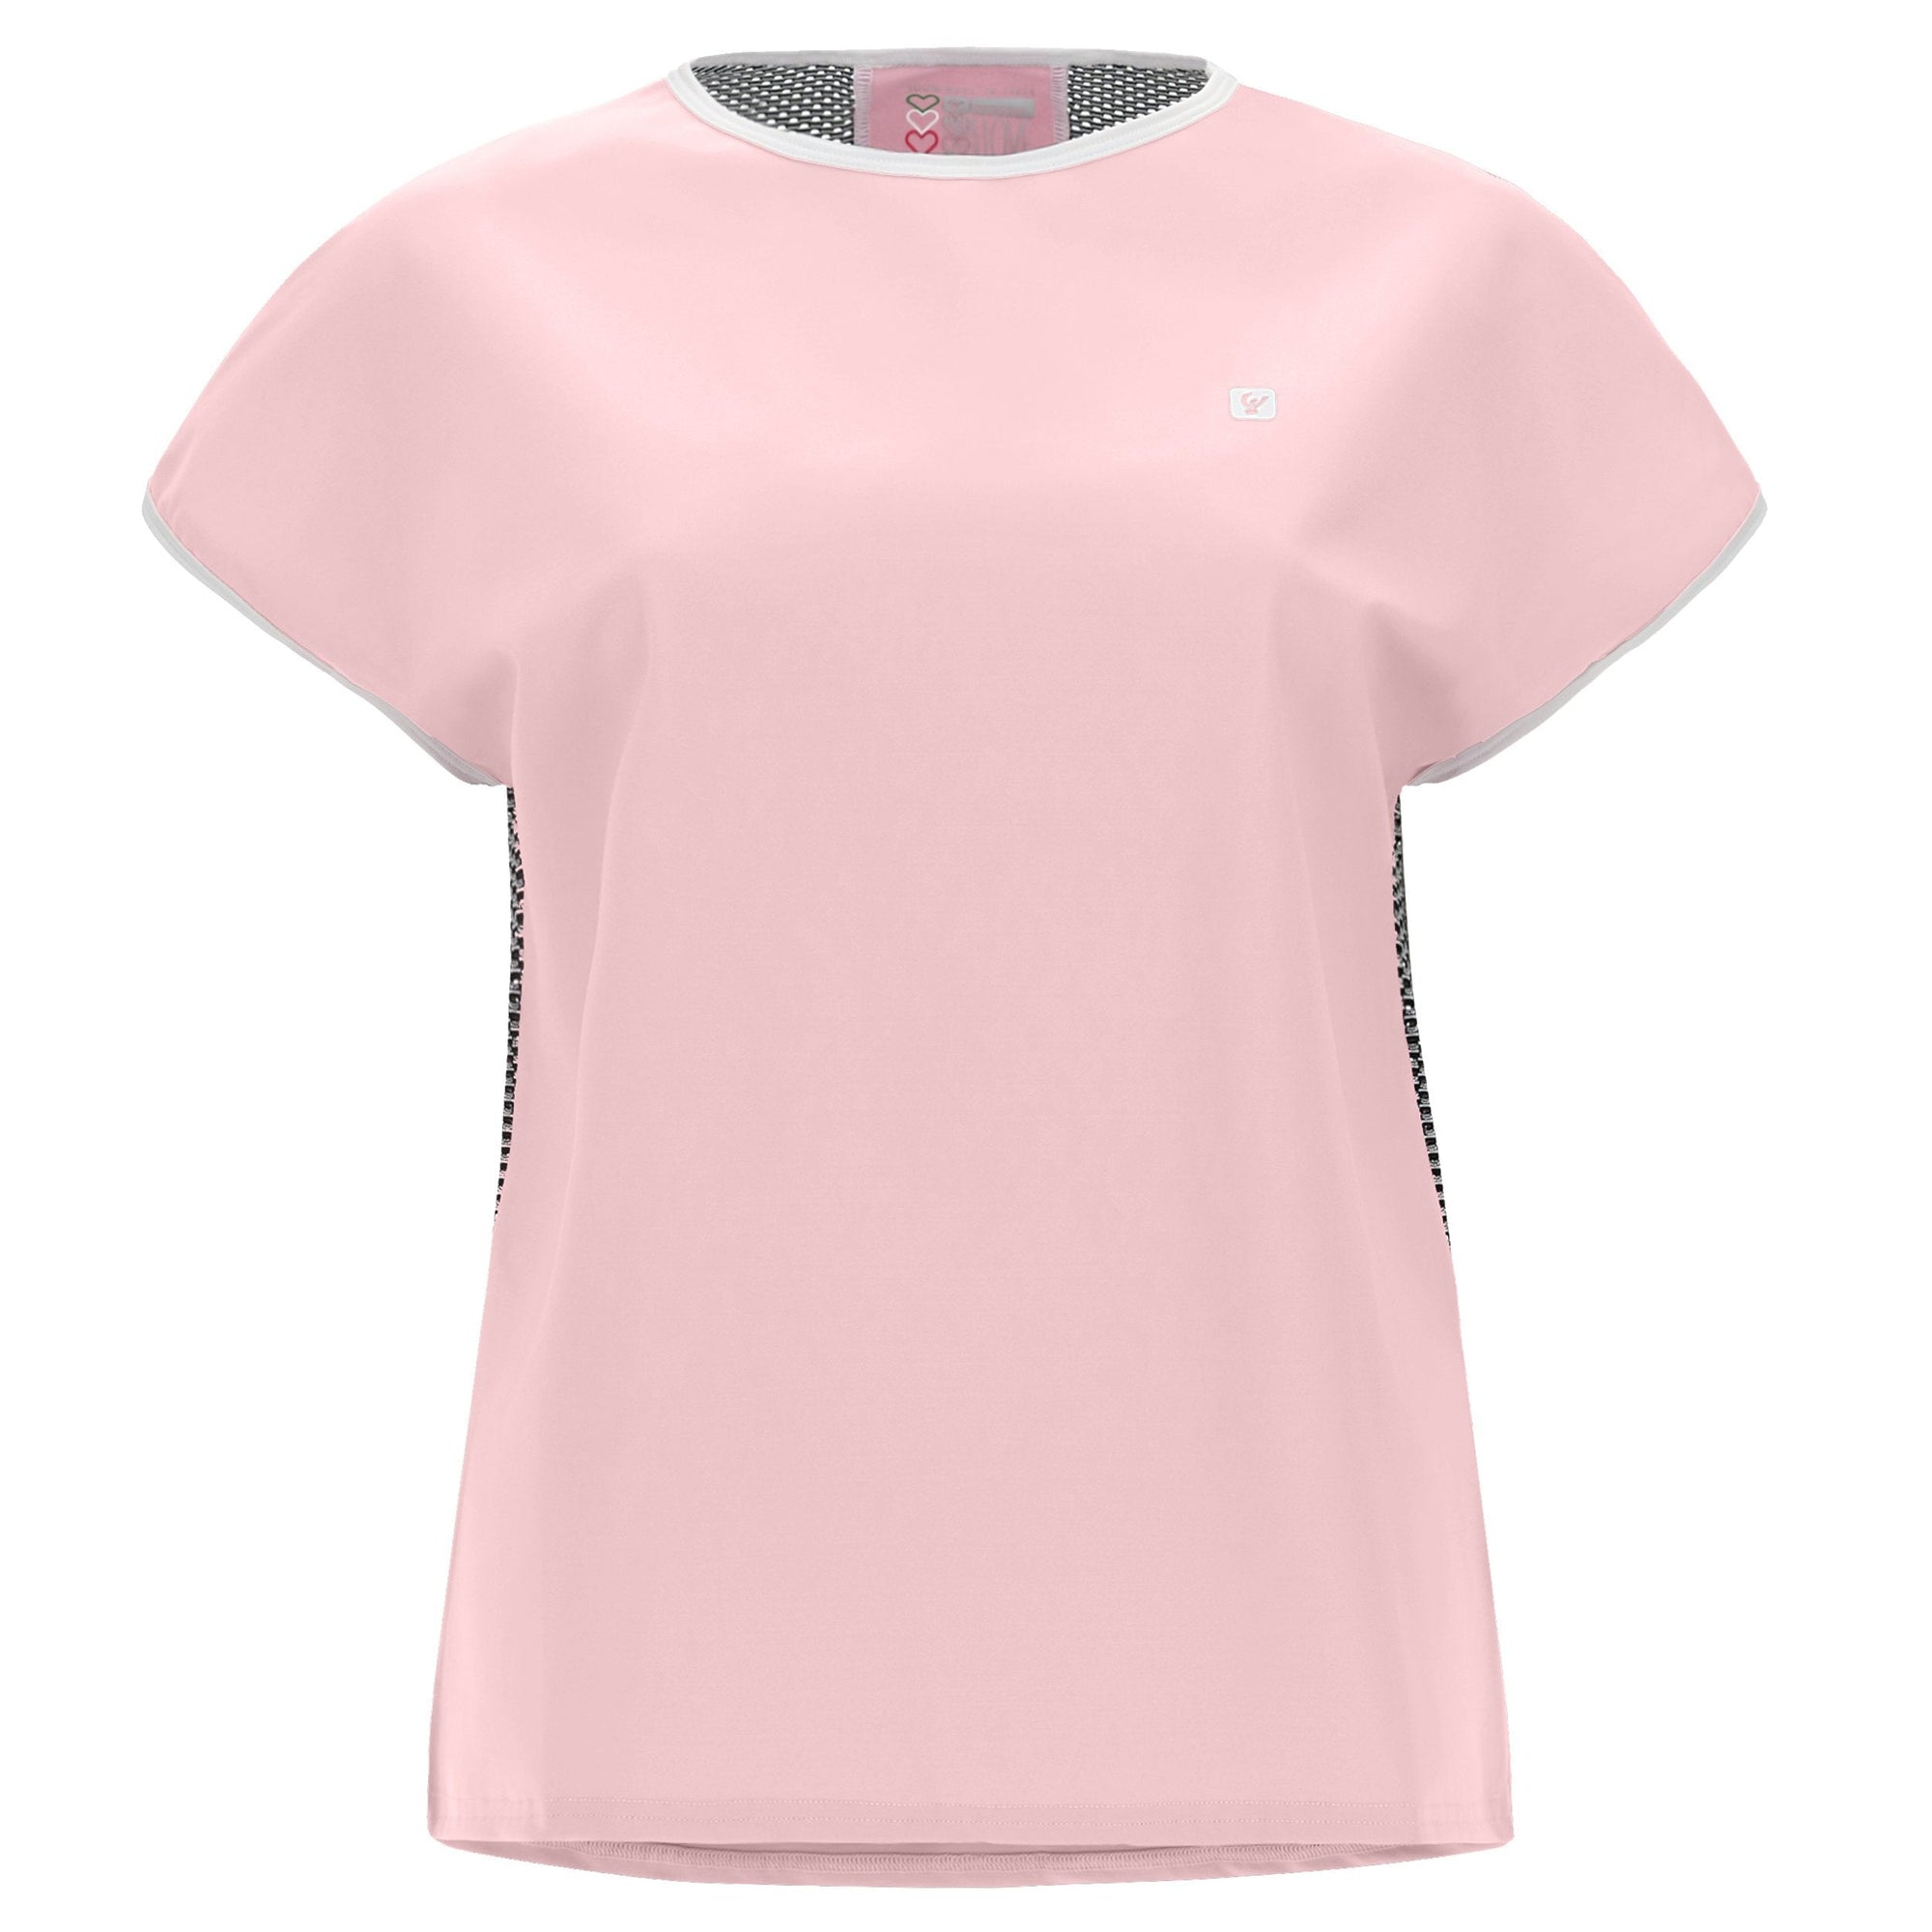 MII Eco Fabric T-Shirt - Pink 1